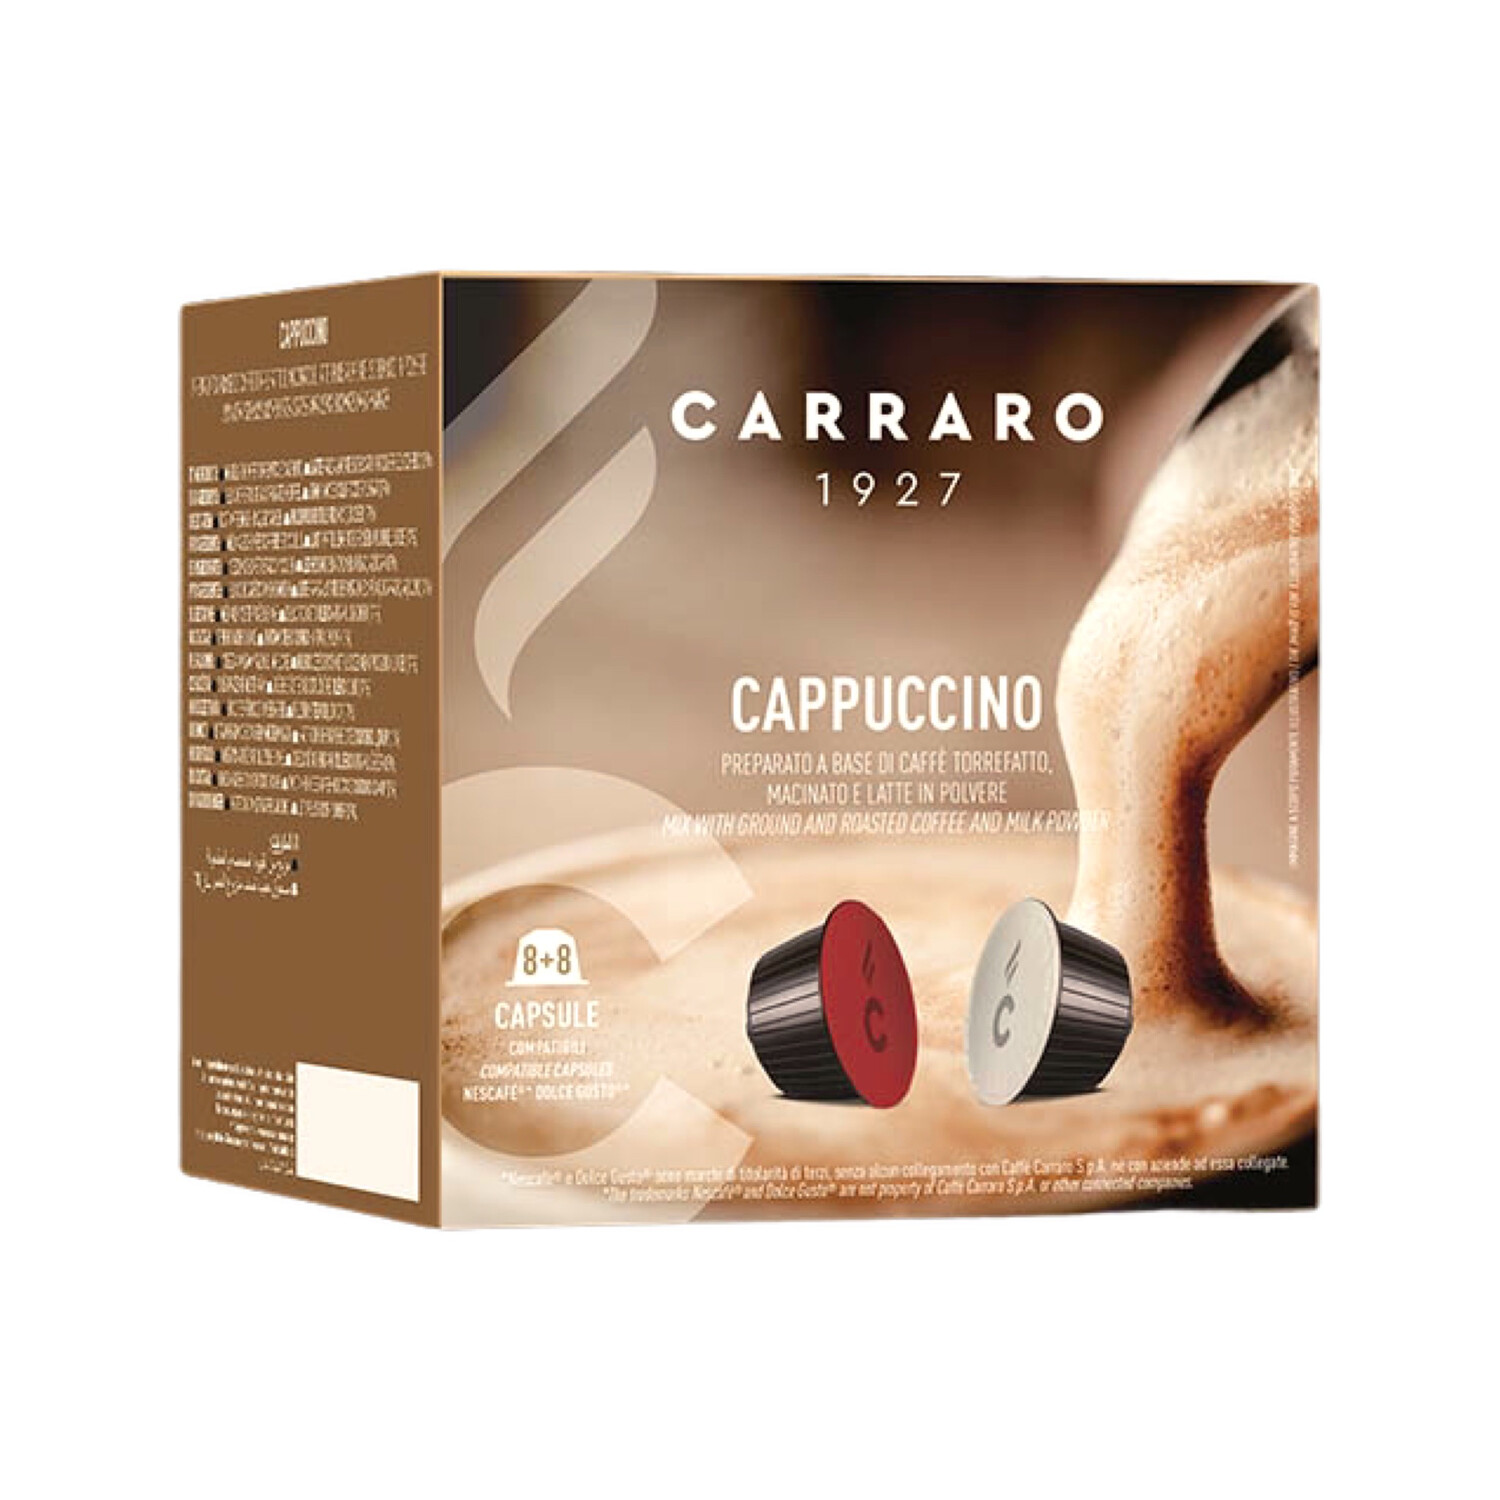 Carraro Dolce Gusto Cappuccino Barista x(8+8)16 капсули